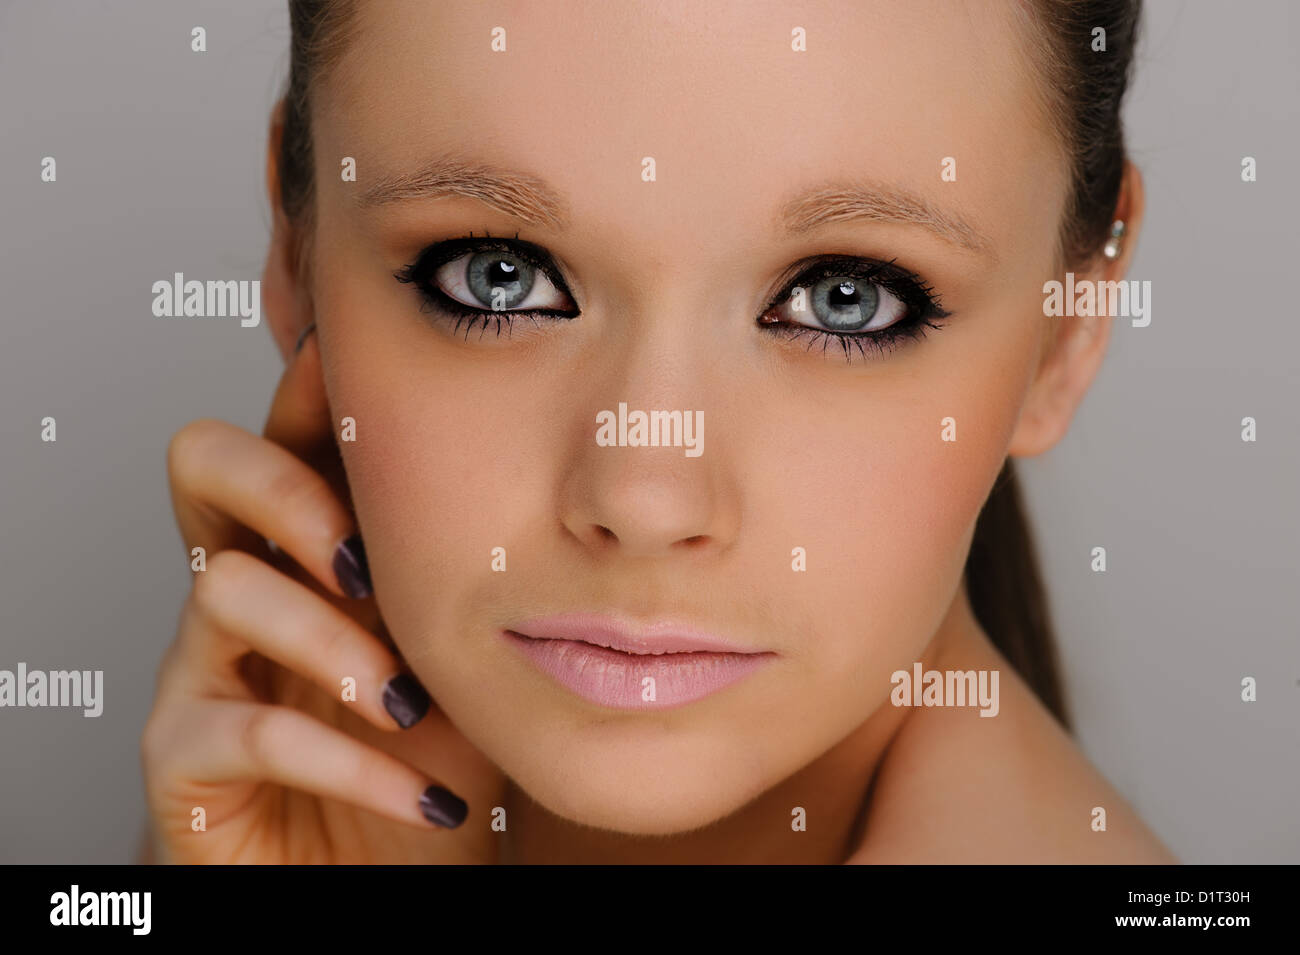 Pretty Girl, beauty portrait on a grey background. Stock Photo